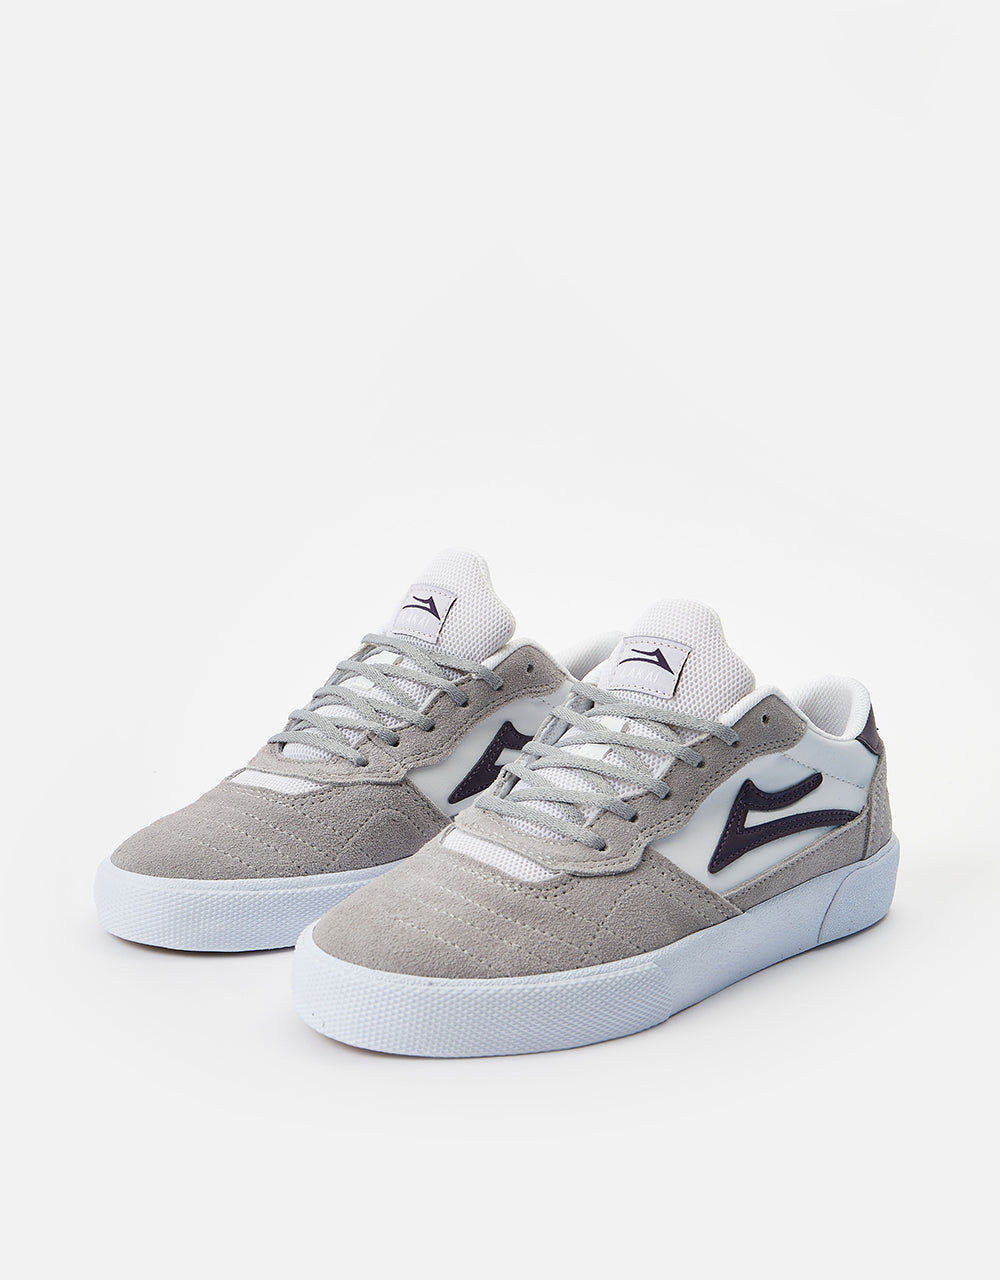 Lakai Cambridge Skate Shoes - Grey/White Suede